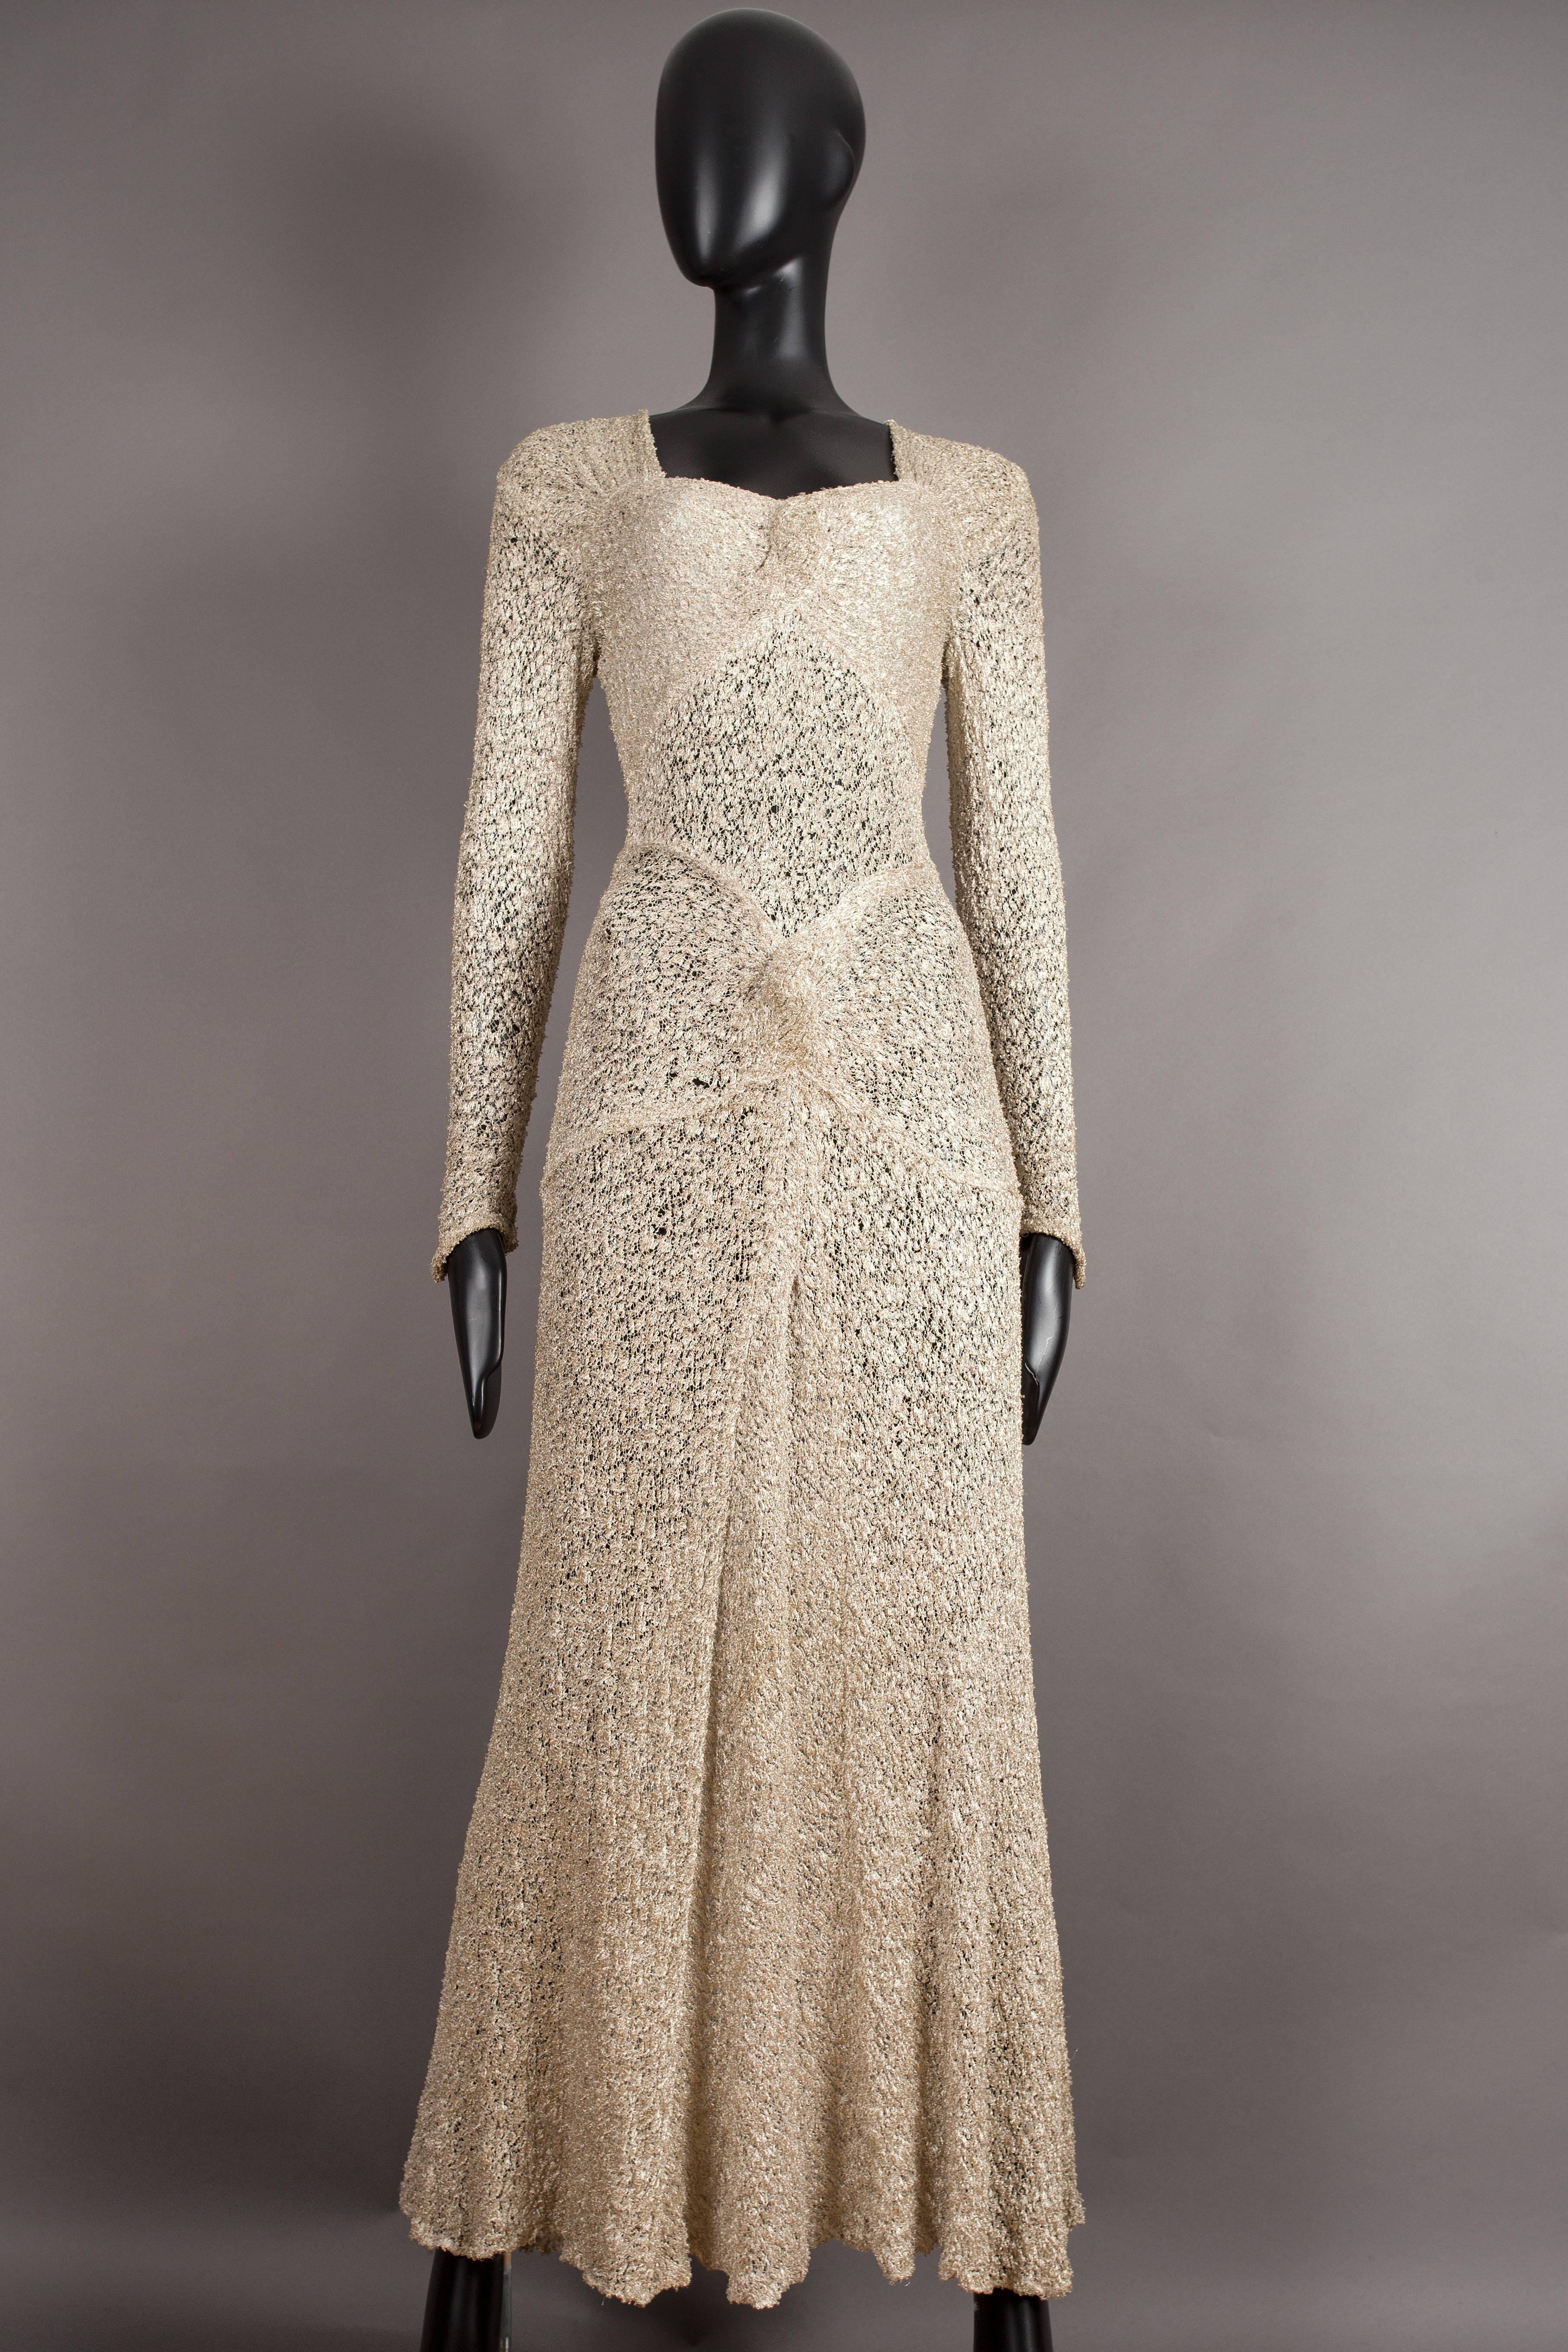 Ann Dawson ivory lame lace knit evening dress, circa 1930s. 